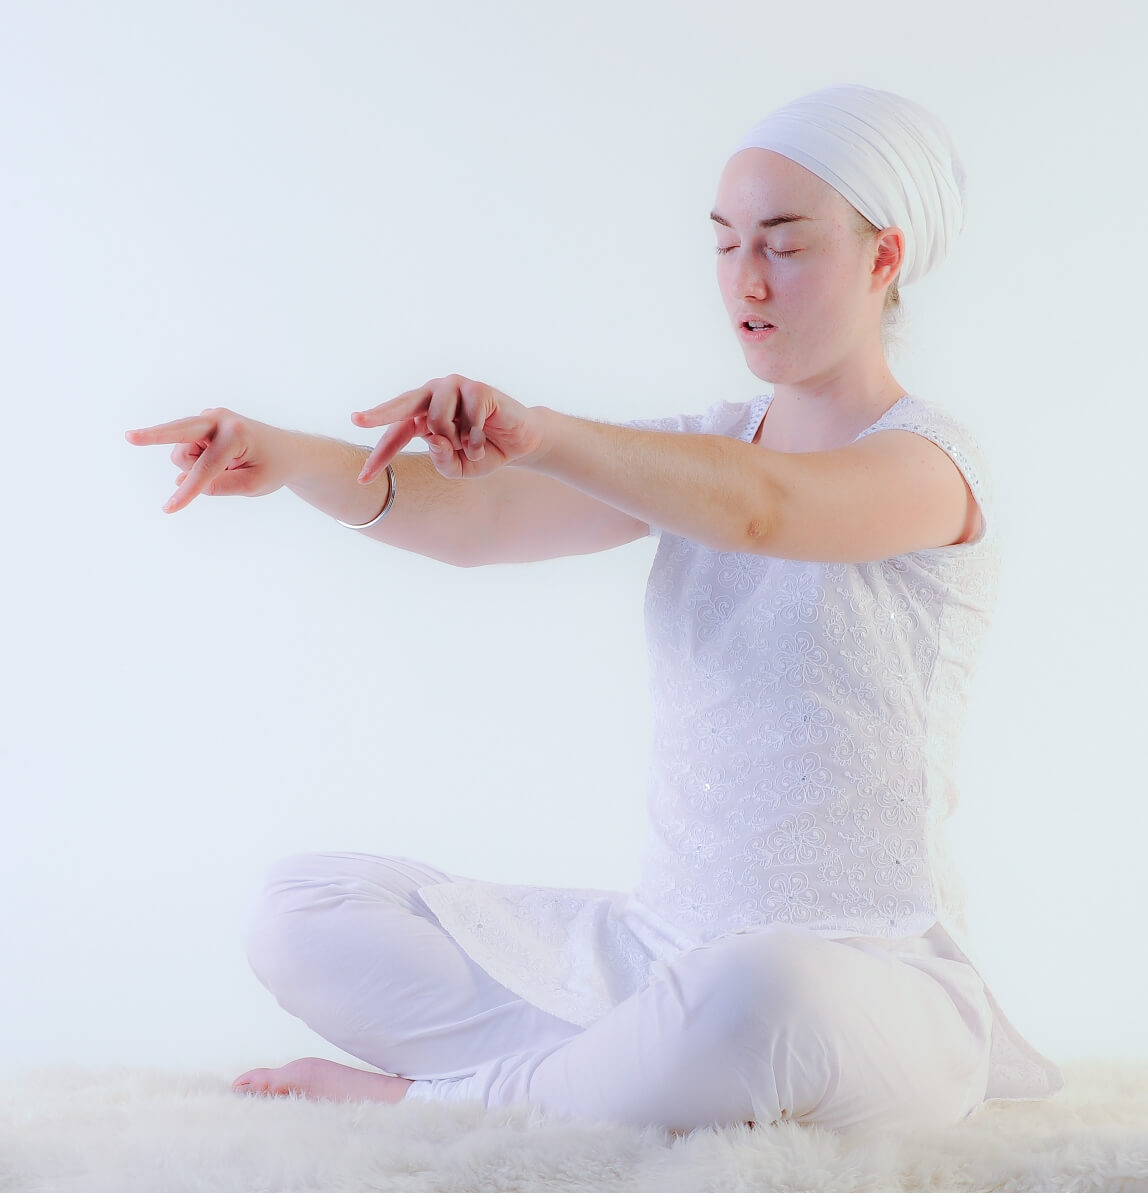 Gutka Kriya: Using the Magic Mantra as a Gutka to Reverse Negative Energy